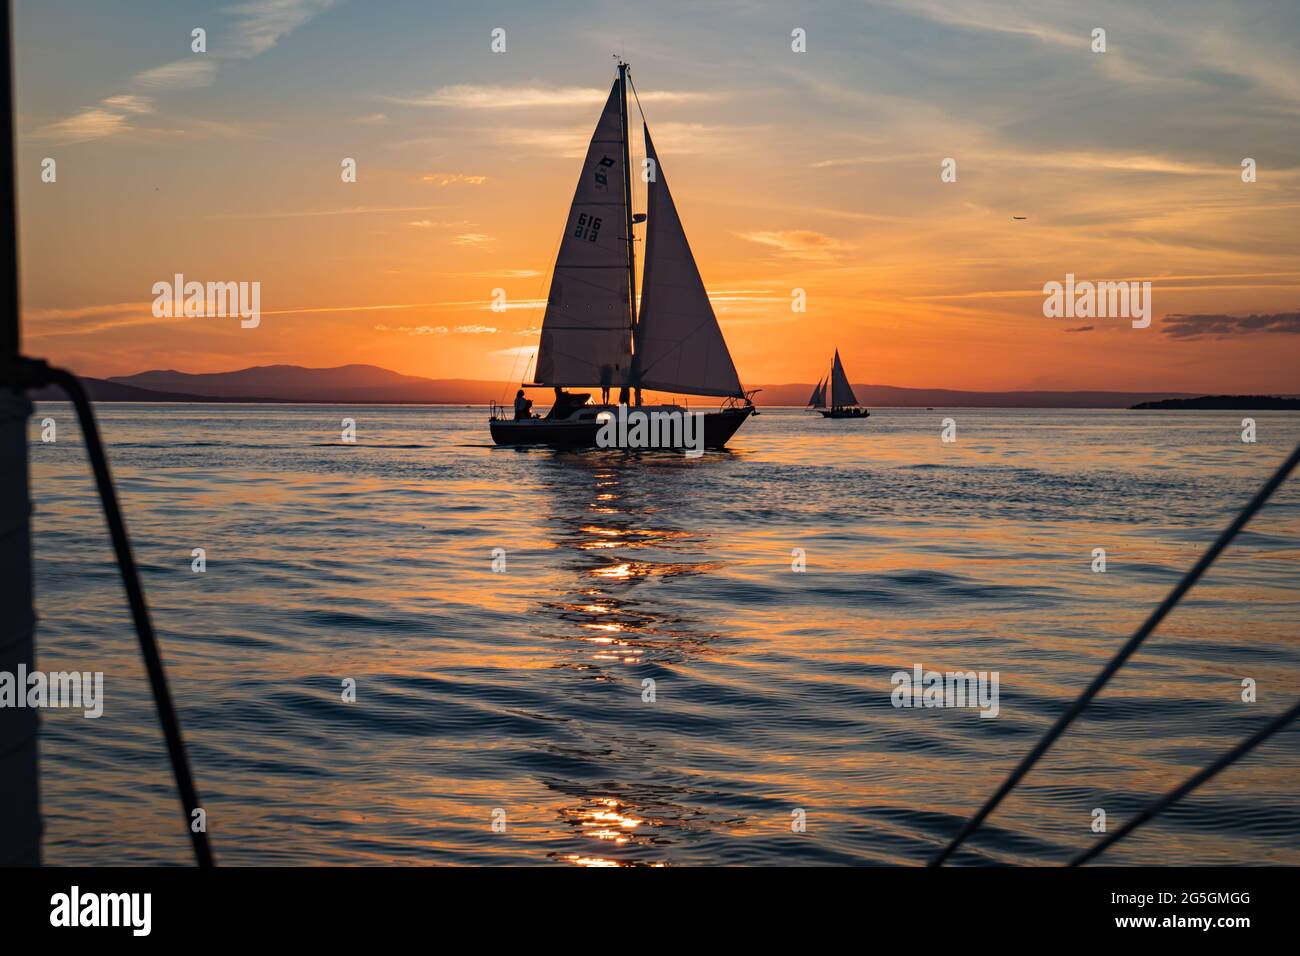 Tramonto sul lago Champlain goduto da barche a vela Foto Stock